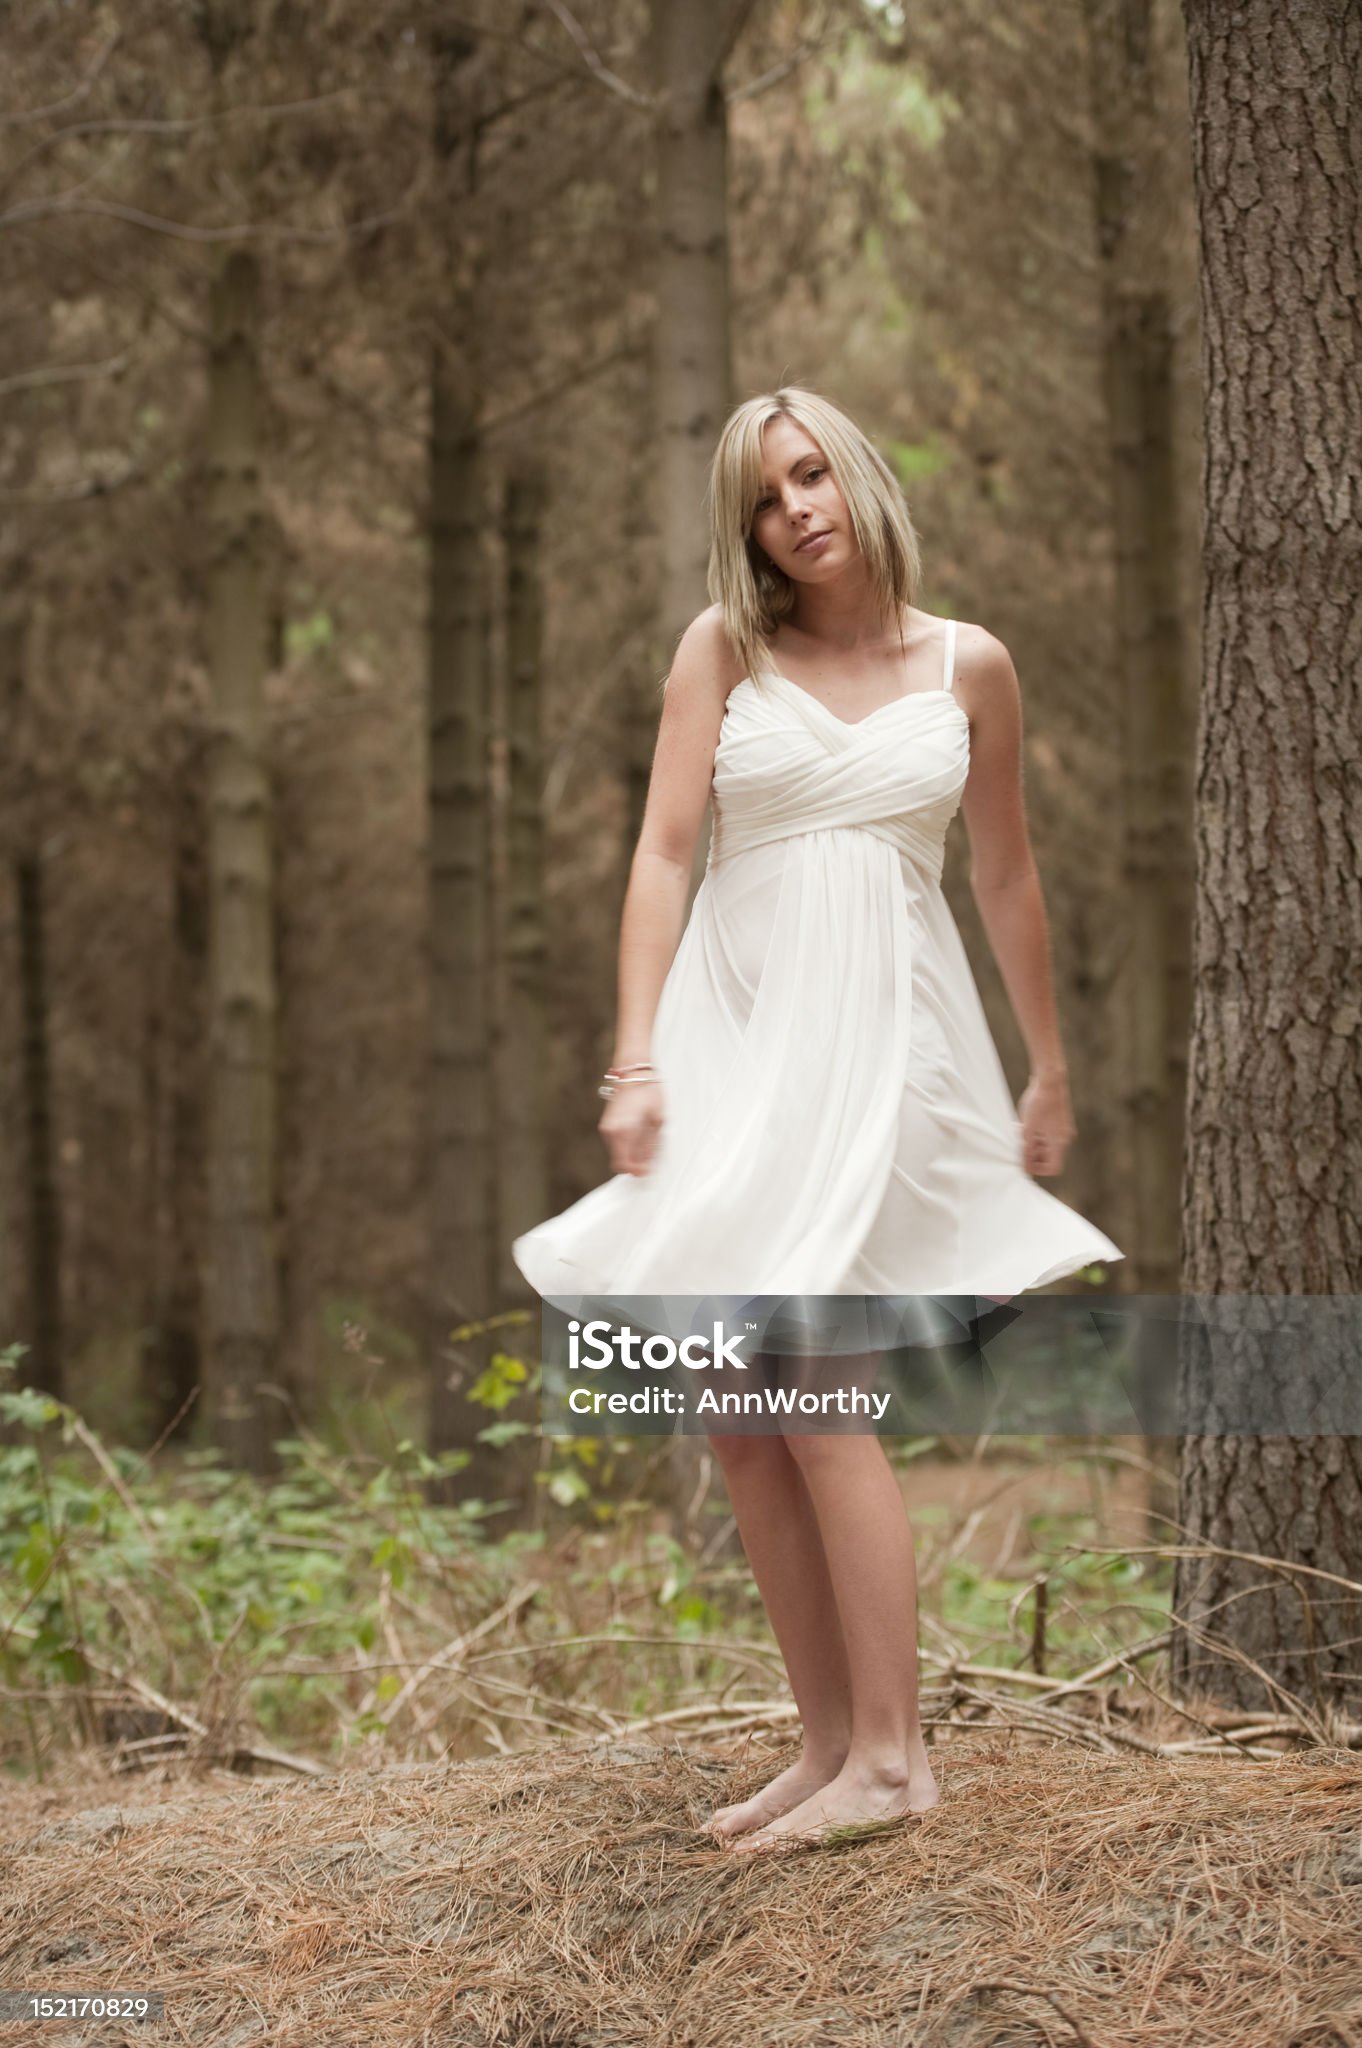 https://media.istockphoto.com/id/152170829/photo/gorgeous-blonde-teen-girl-in-forest.jpg?s=2048x2048&amp;w=is&amp;k=20&amp;c=sEmAbbOSysXGQD7345dGPjT5ZJtcTCBzVNFQXLXn7-4=